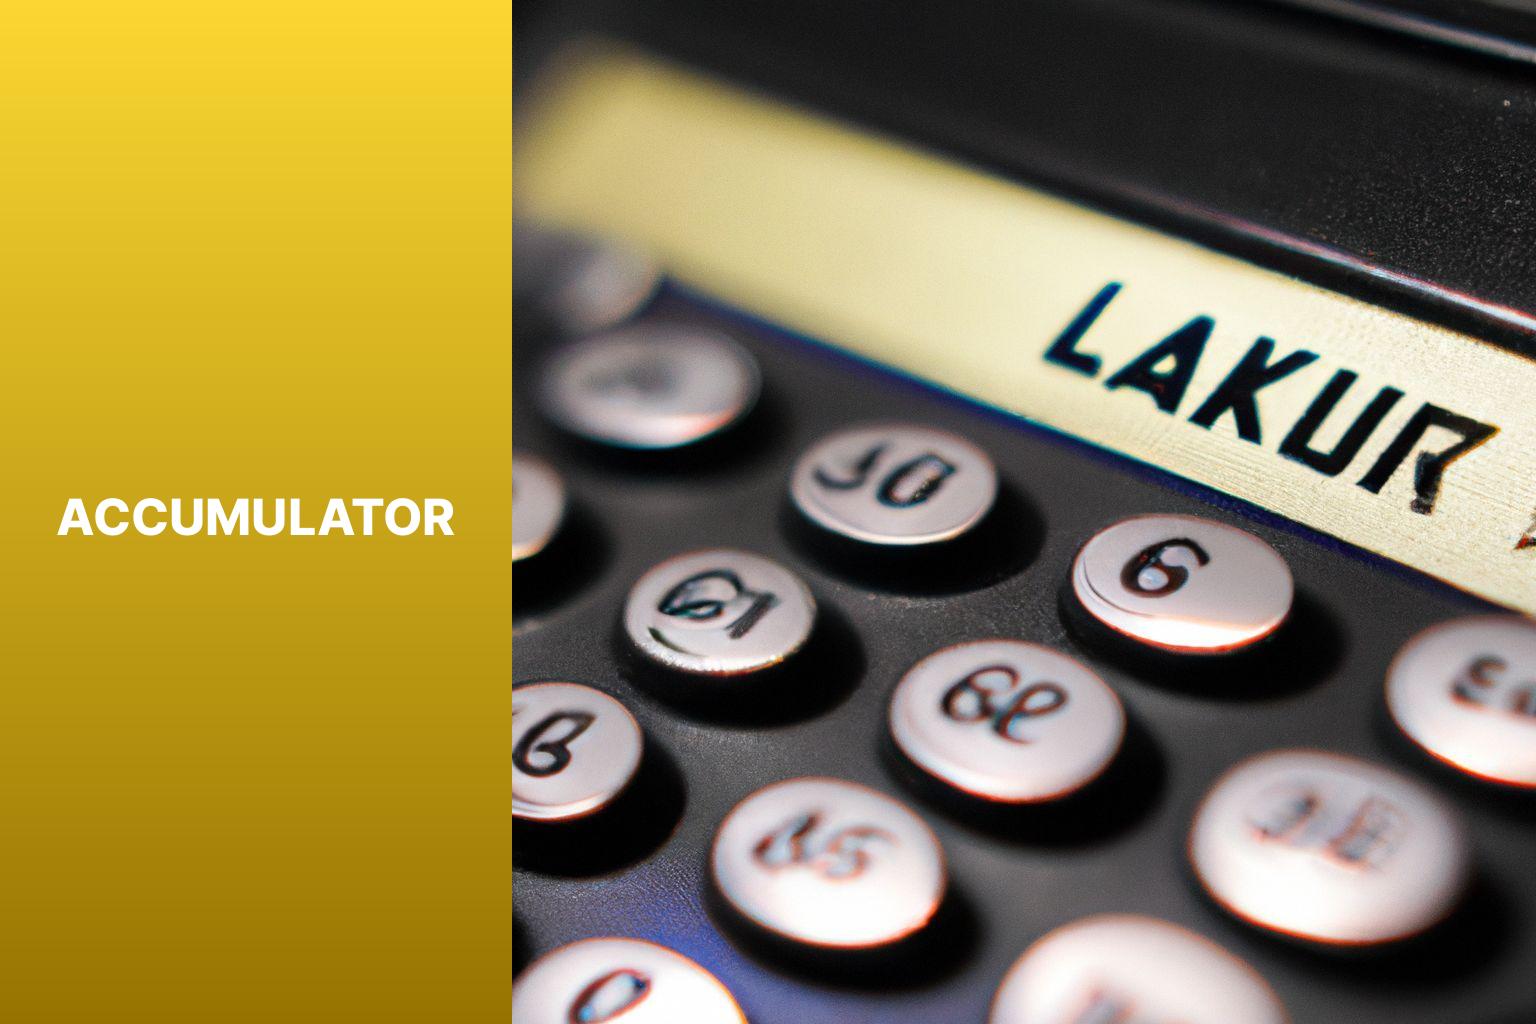 Accumulator - Lucky 63 Calculator: Calculating Lucky 63 Bets 